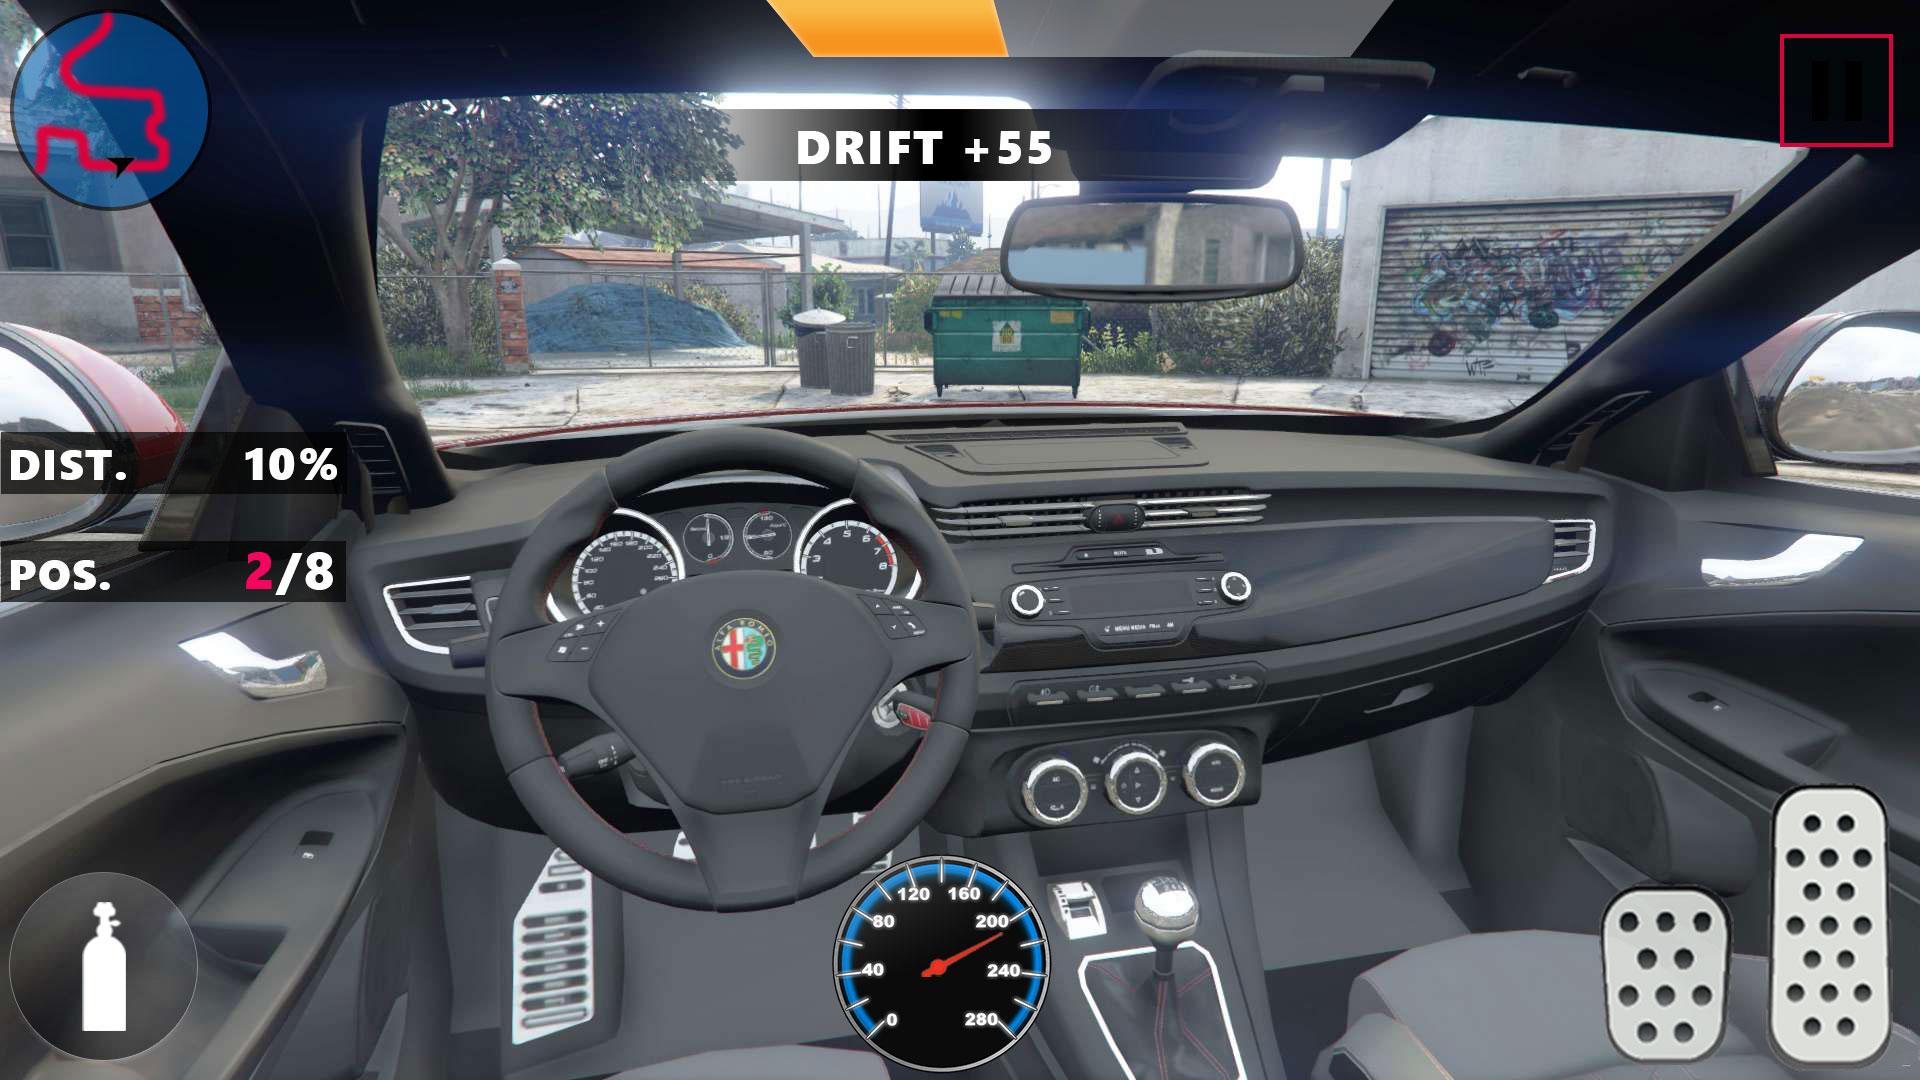 Romeo Giulietta Extreme City Car Drift & Drive 1.0 Screenshot 9